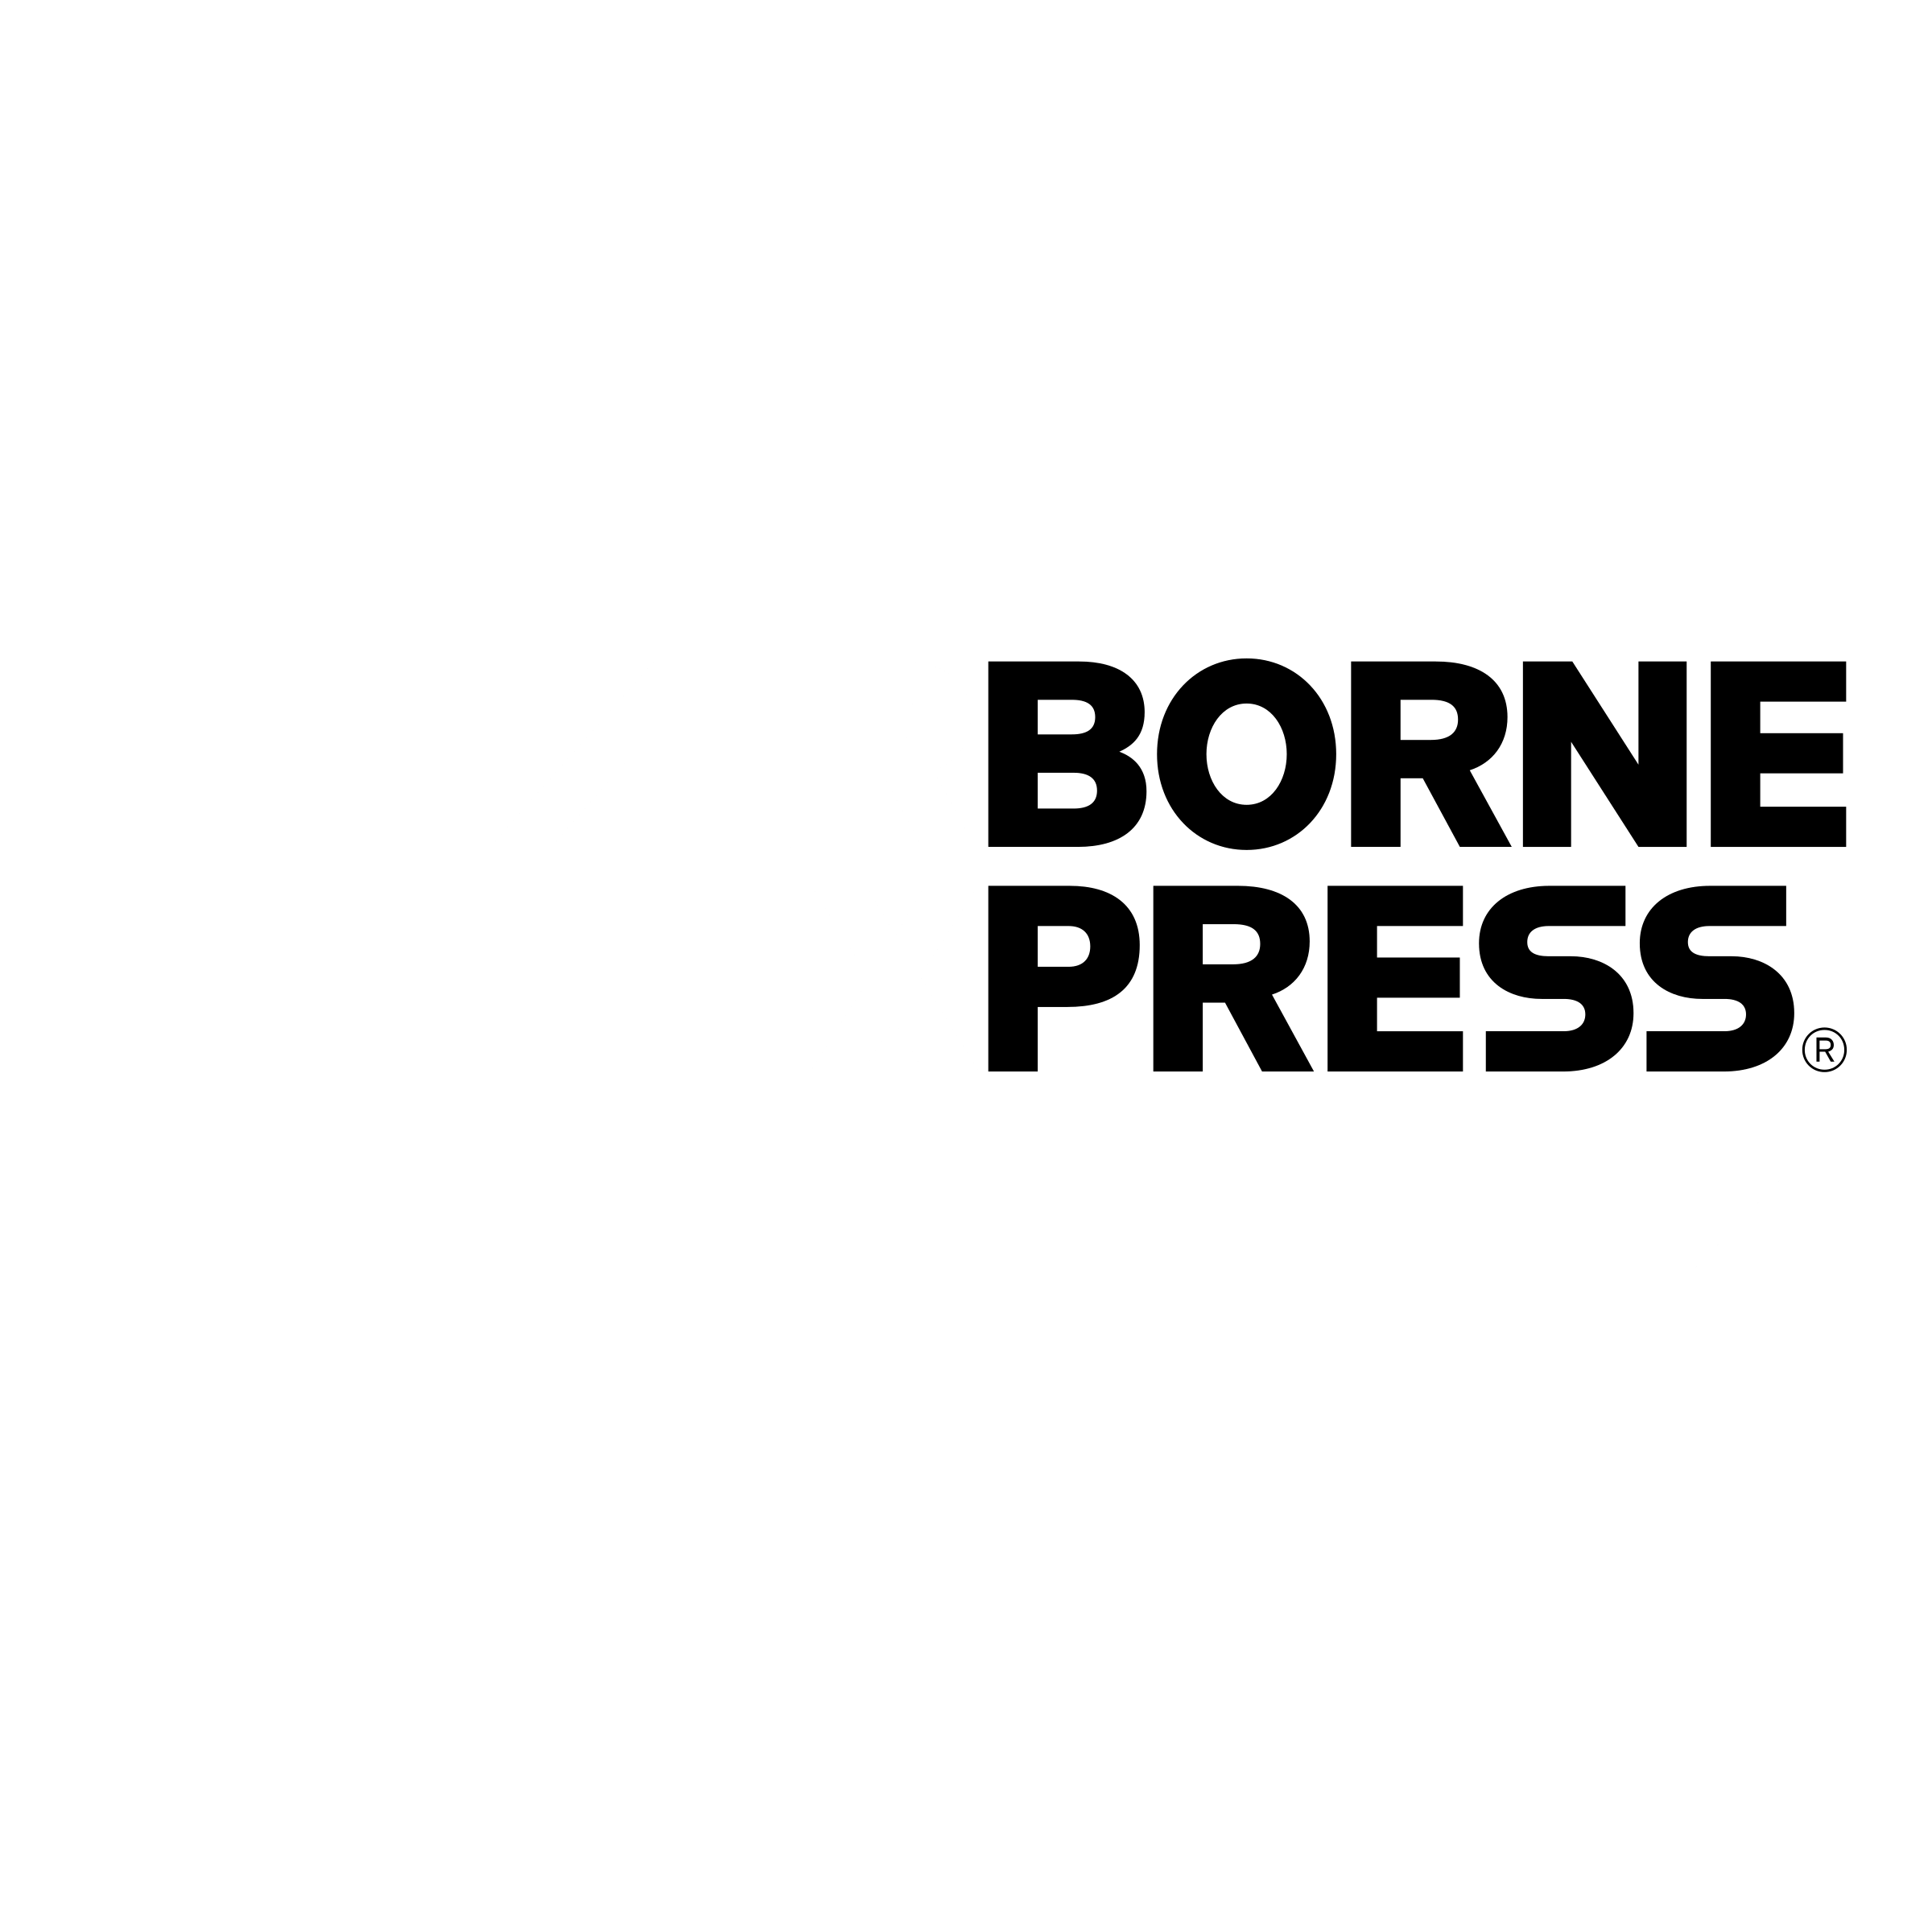 Airborne Express Logo - Airborne Express Logo PNG Transparent & SVG Vector